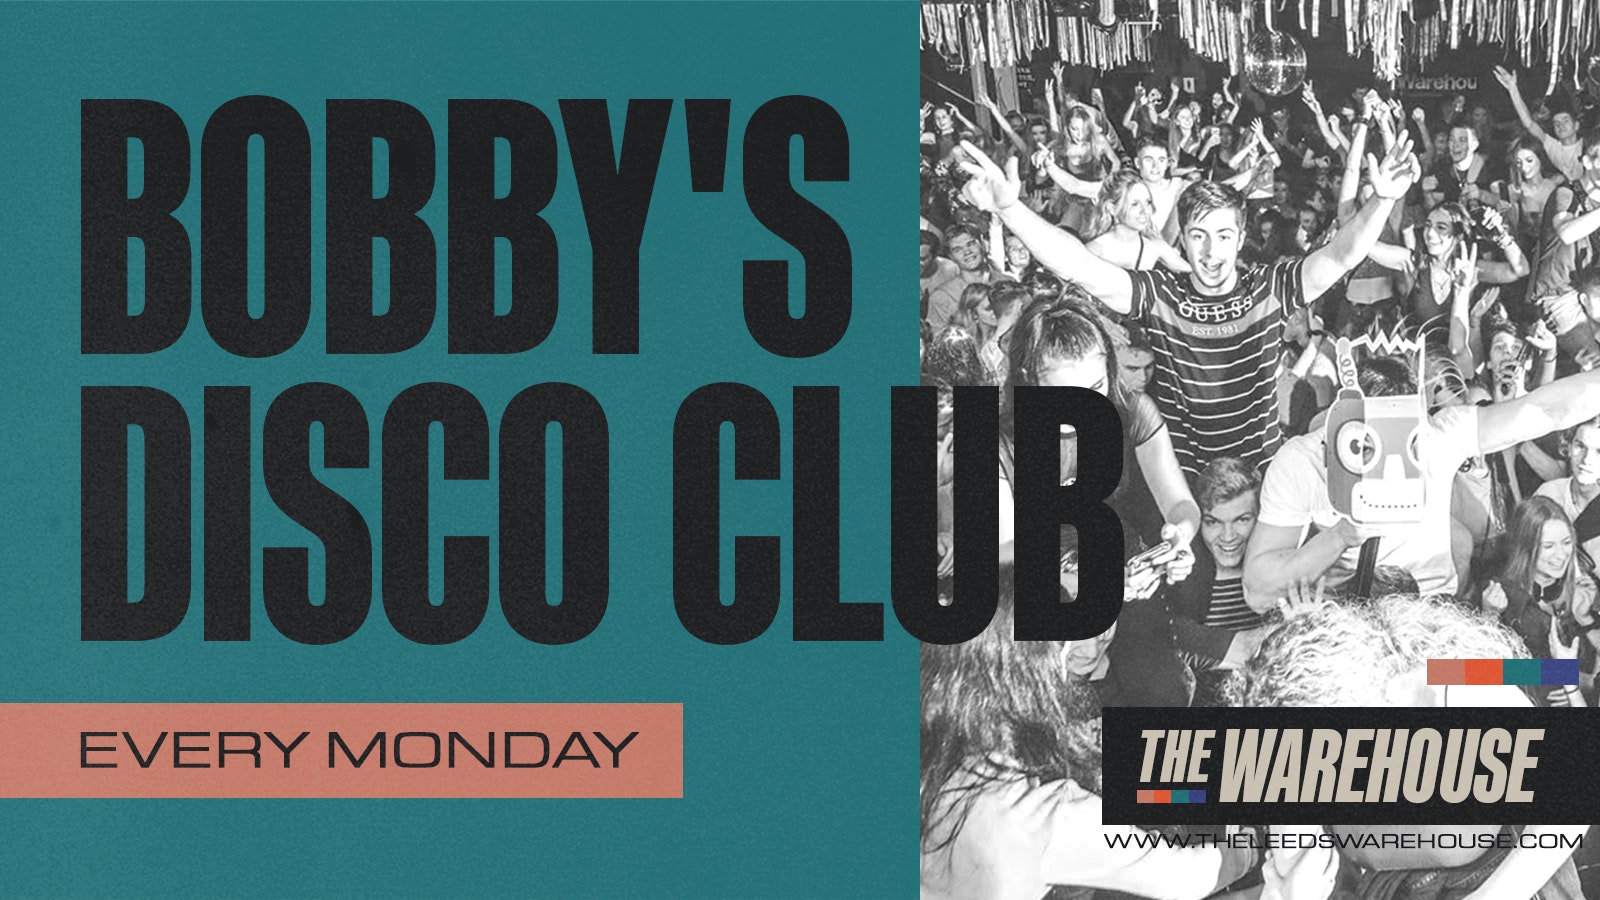 Bobbys Disco – Club